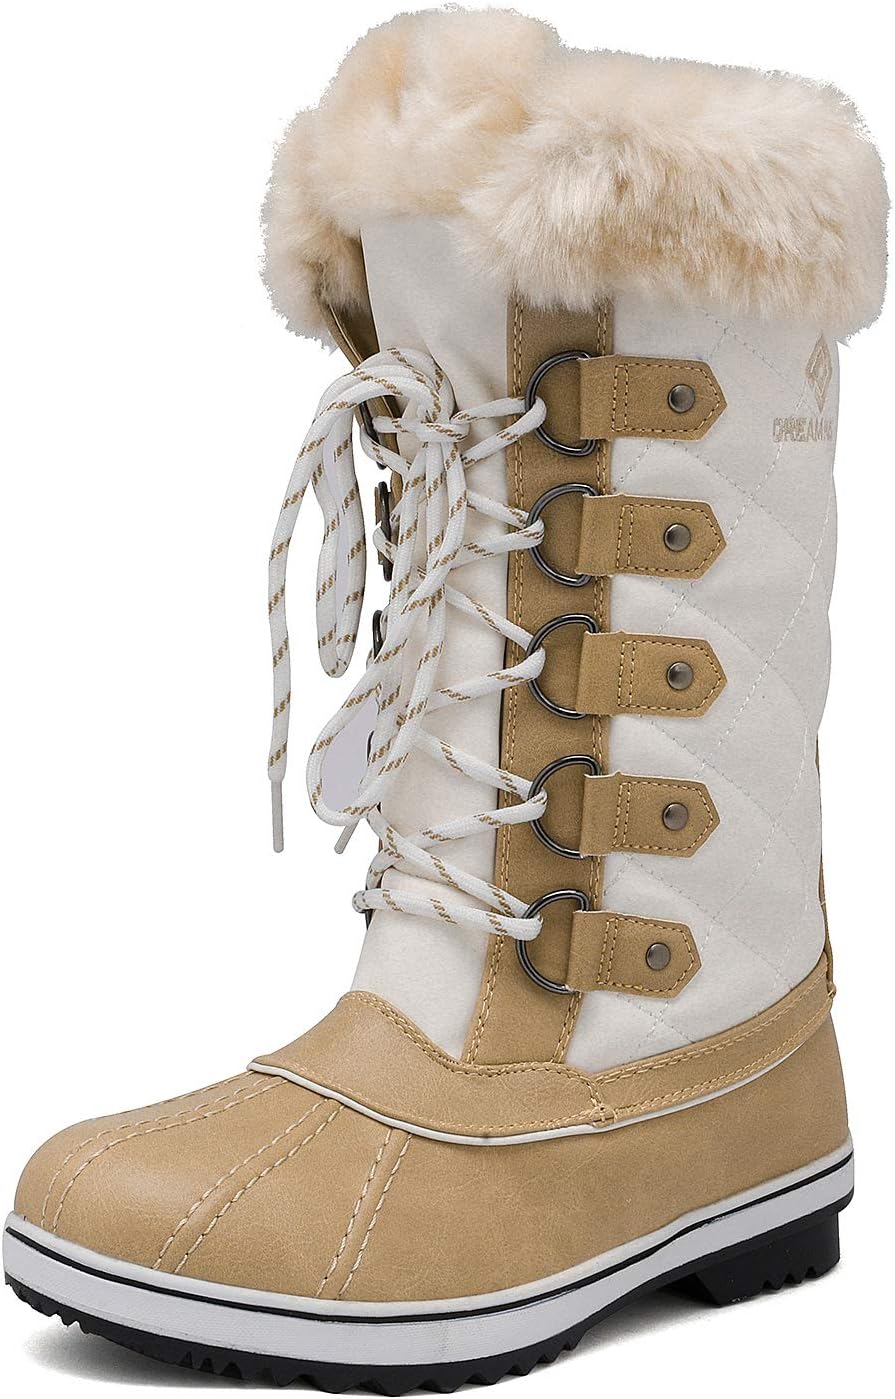 DREAM PAIRS Women' River_1 Mid Calf Waterproof Winter Snow Boots